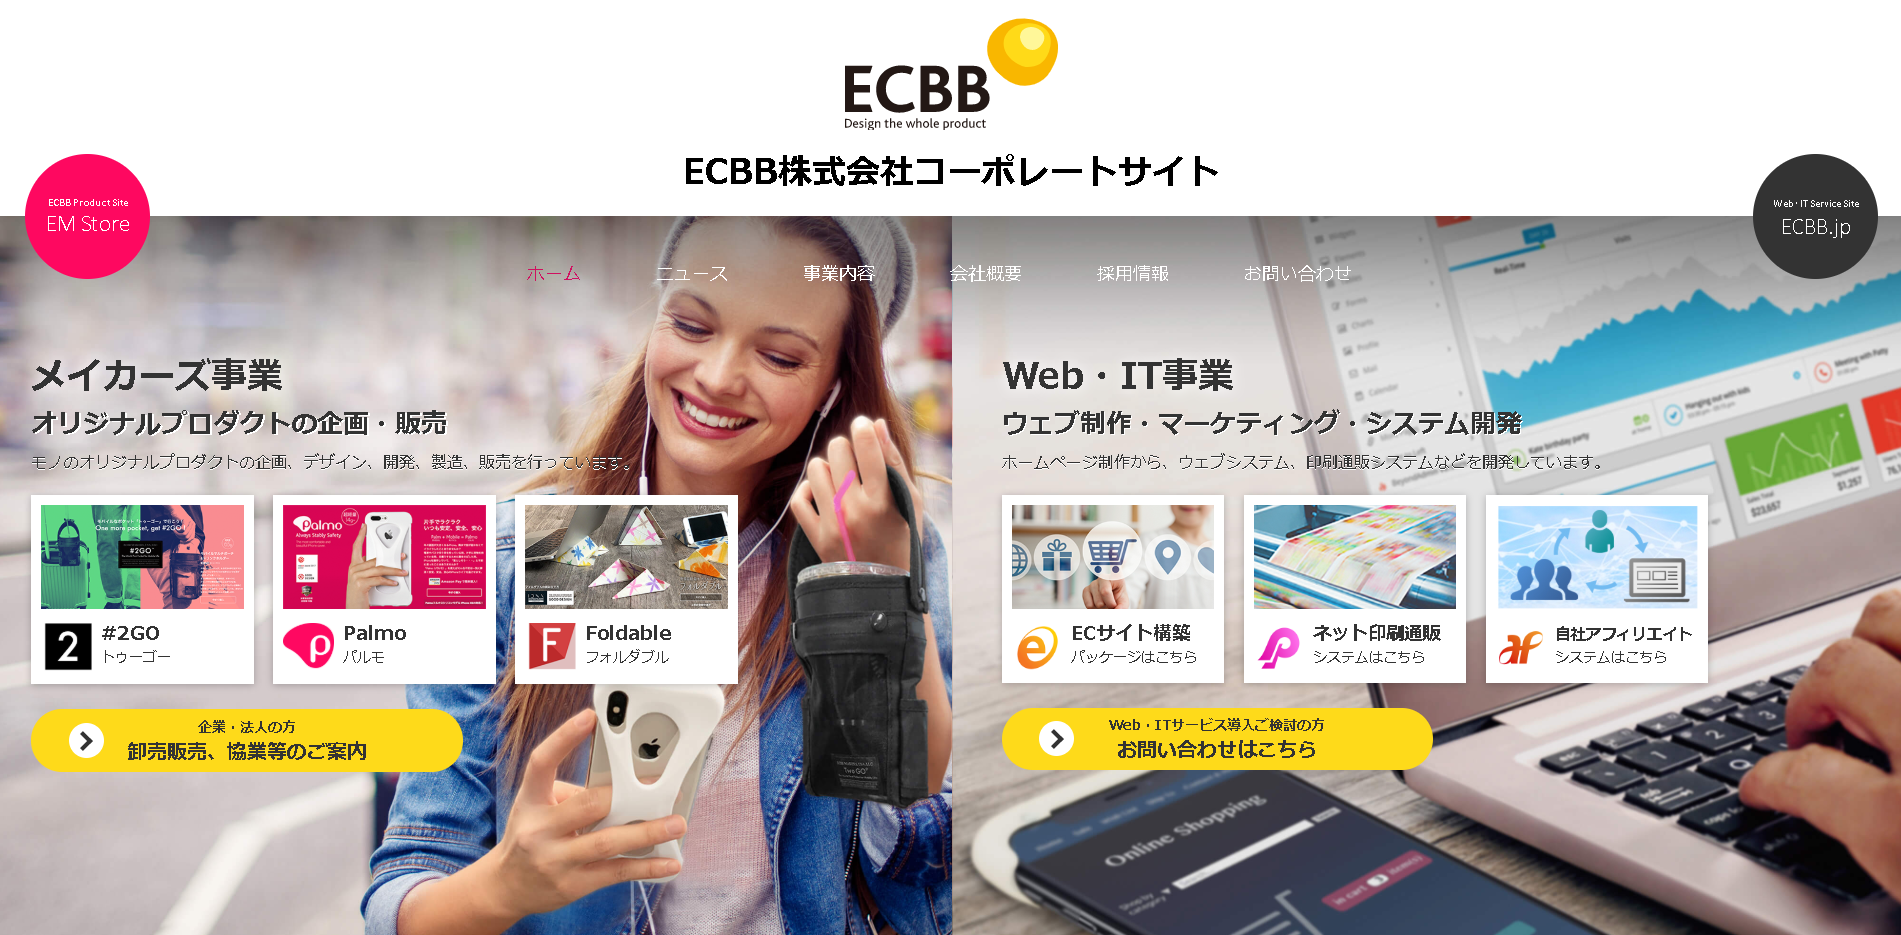 ECBB株式会社のECBB株式会社サービス